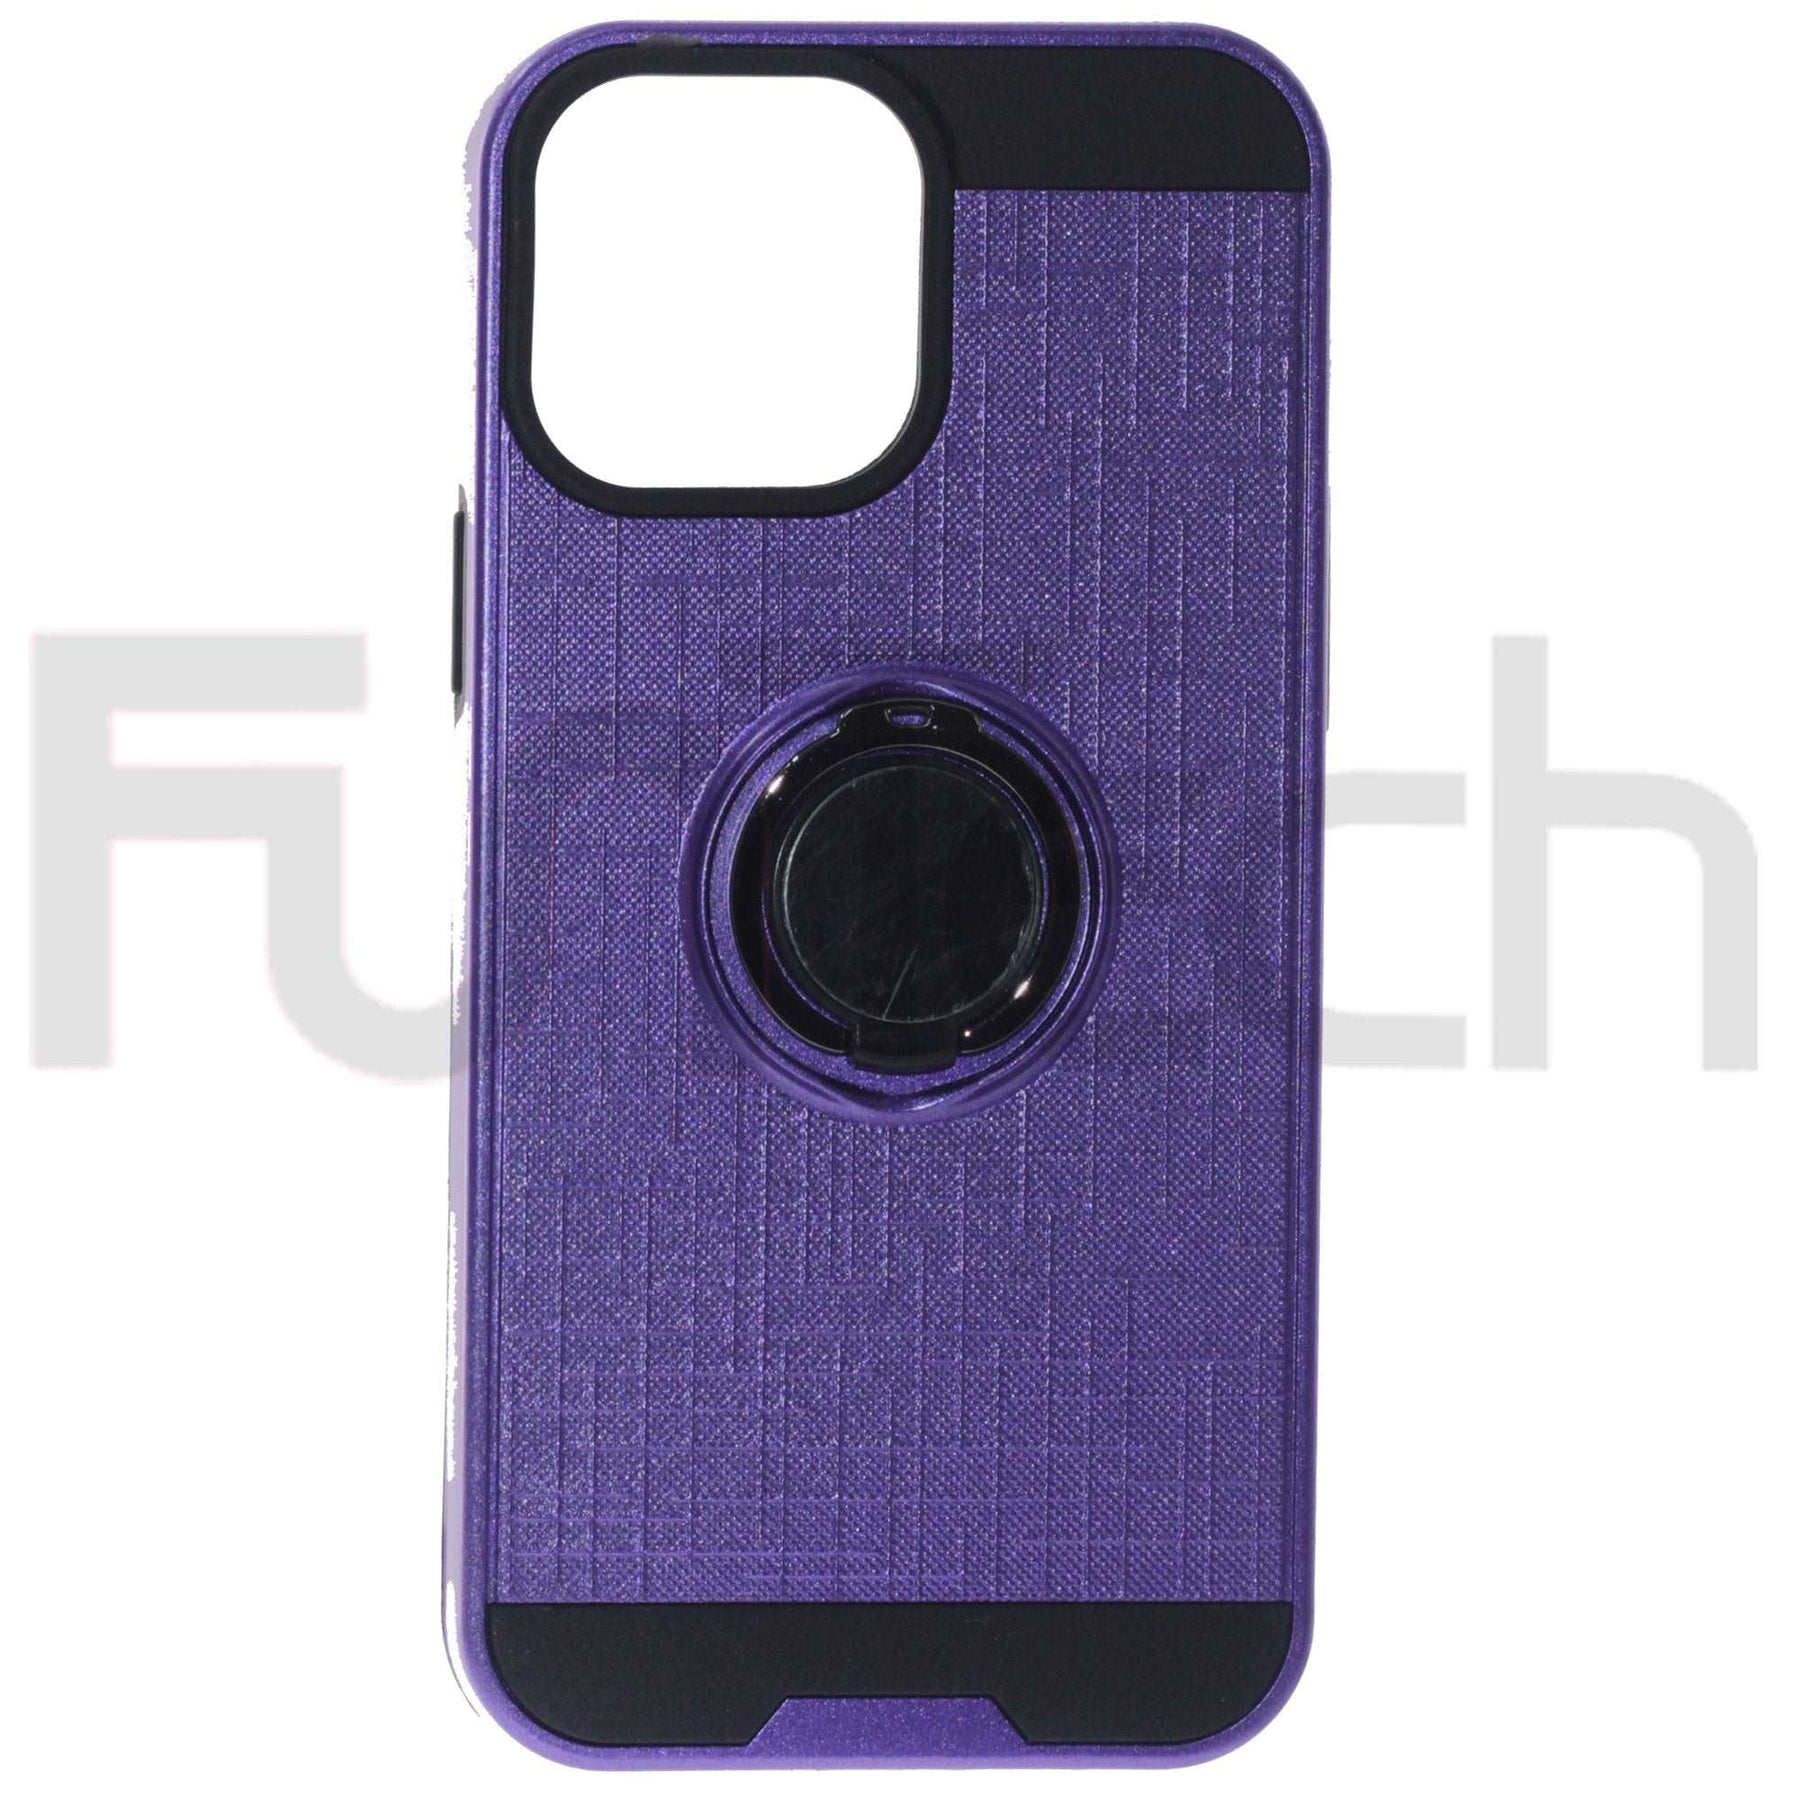 Apple iPhone 13 Pro, Ring Armor Case, Color Purple.